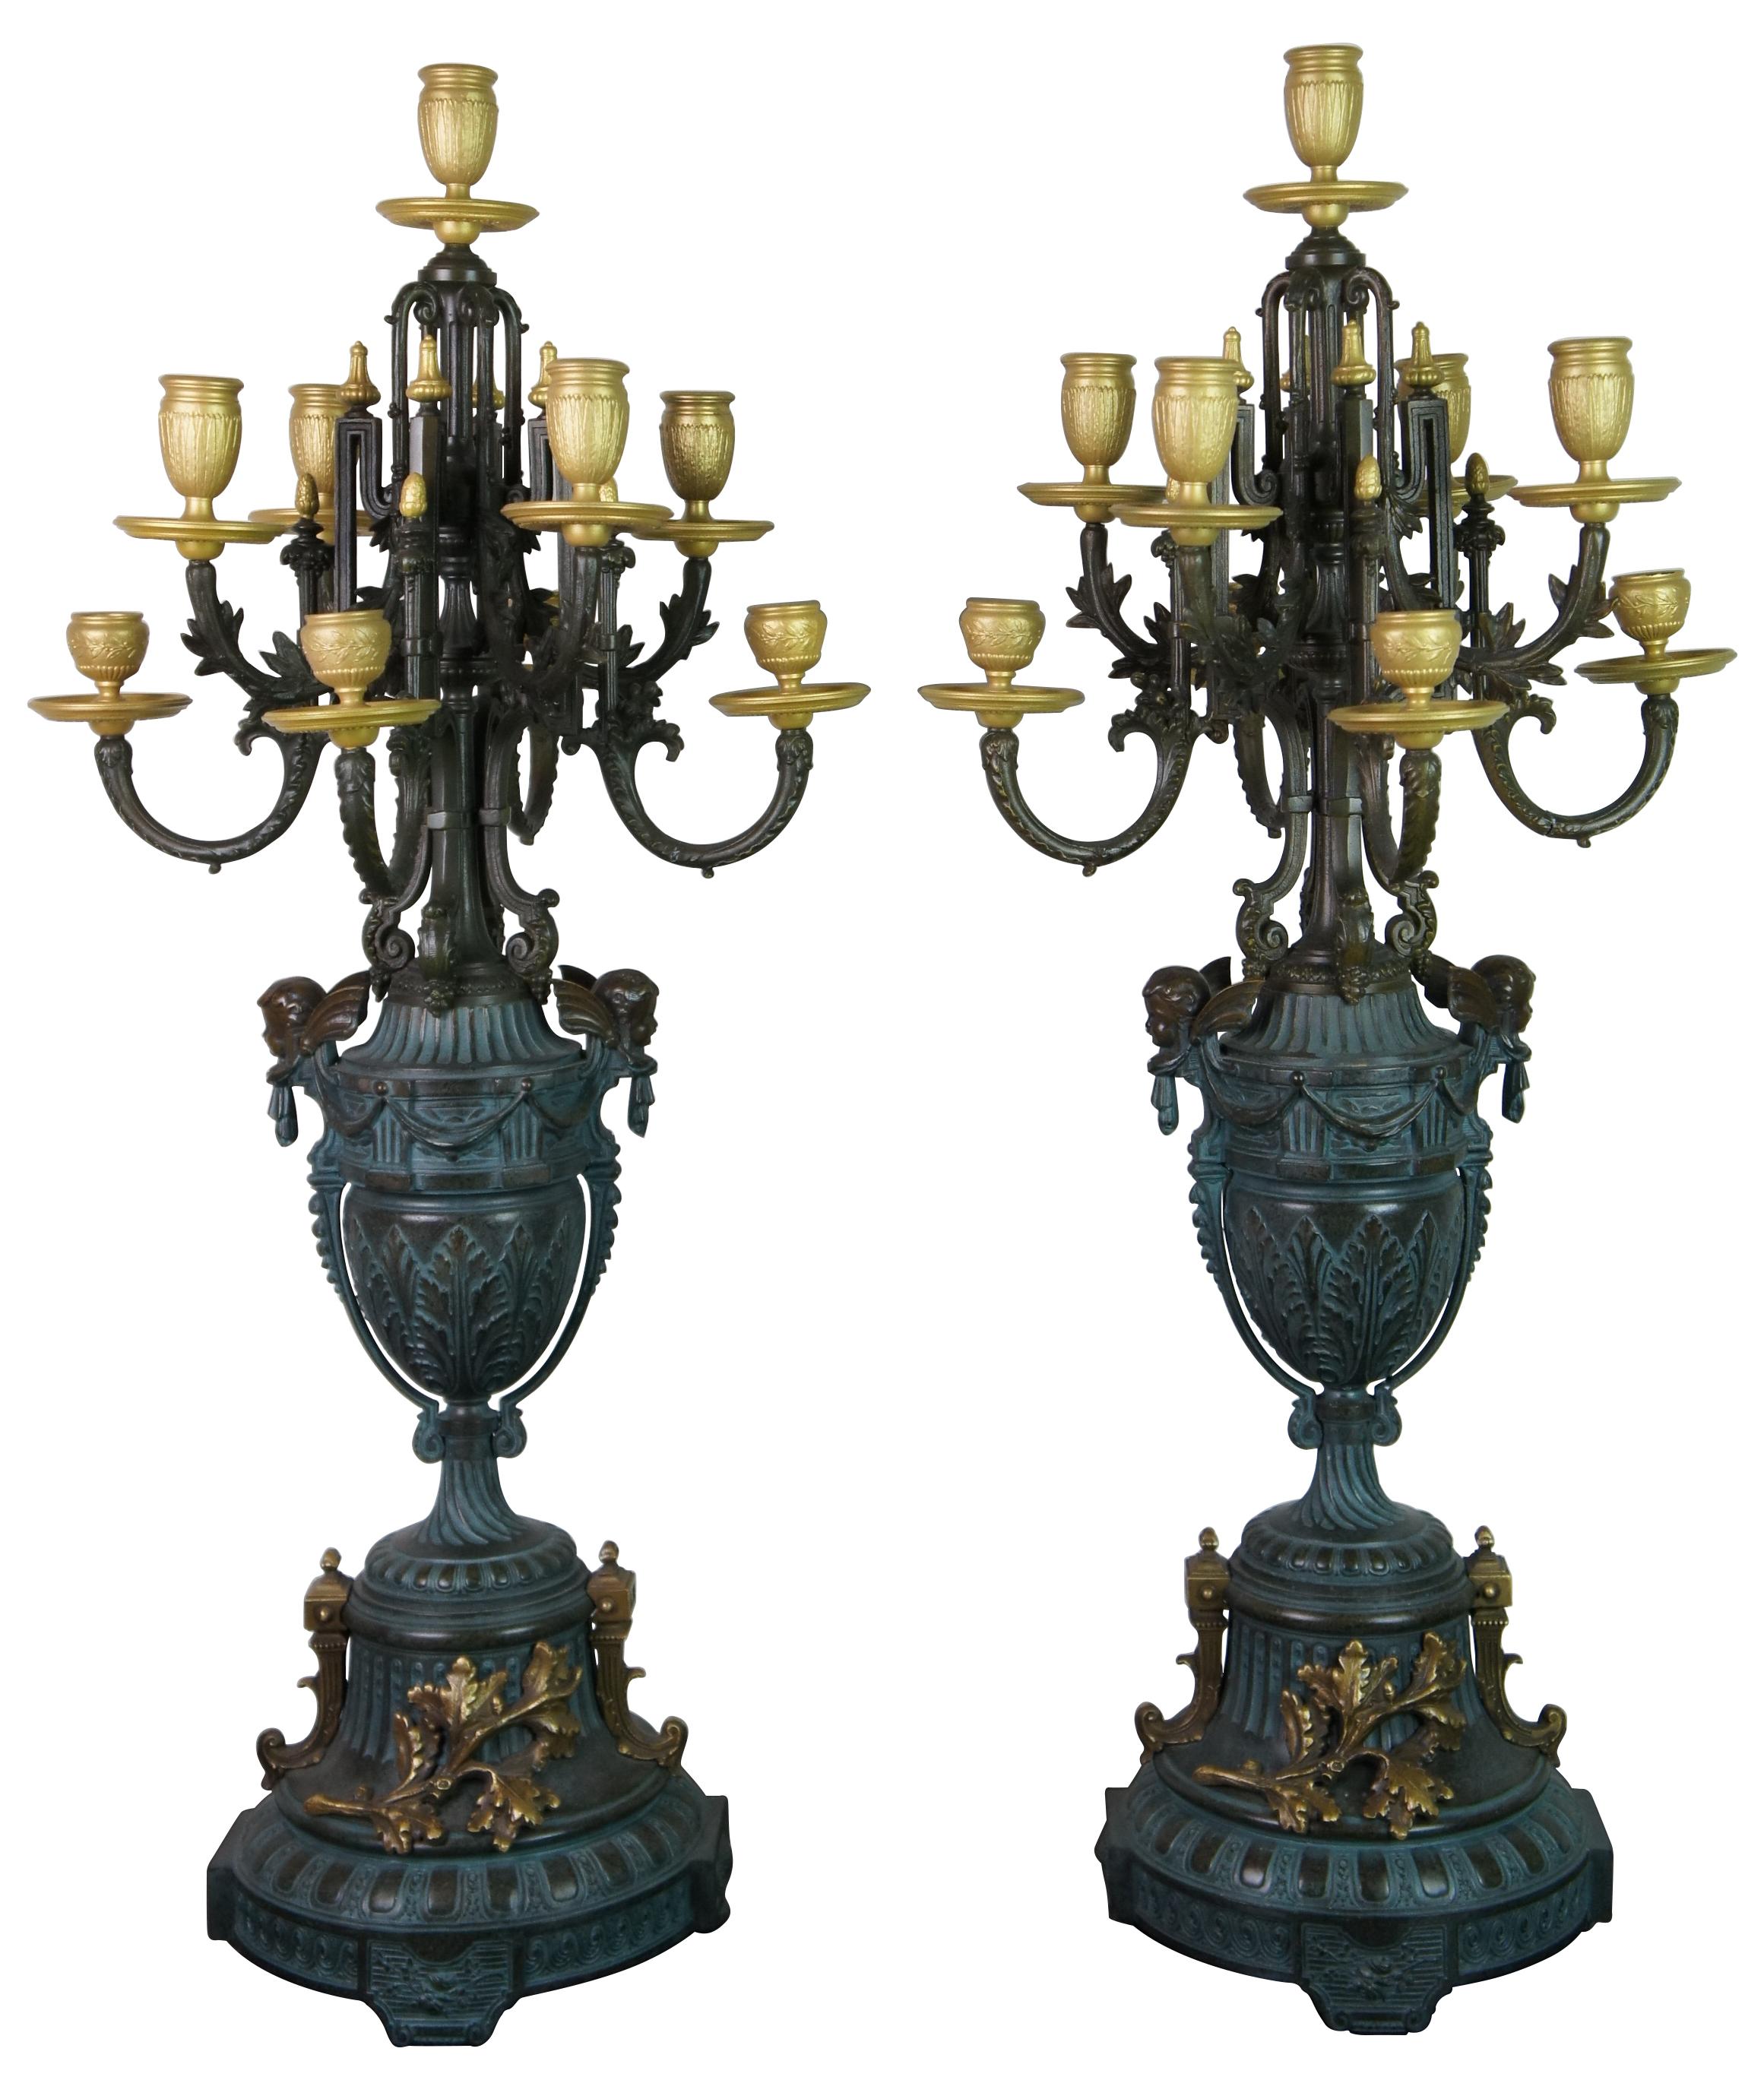 Art Nouveau Antique French Auguste Moreau Gilt Bronze Mantel Garniture Clock Candelabra For Sale